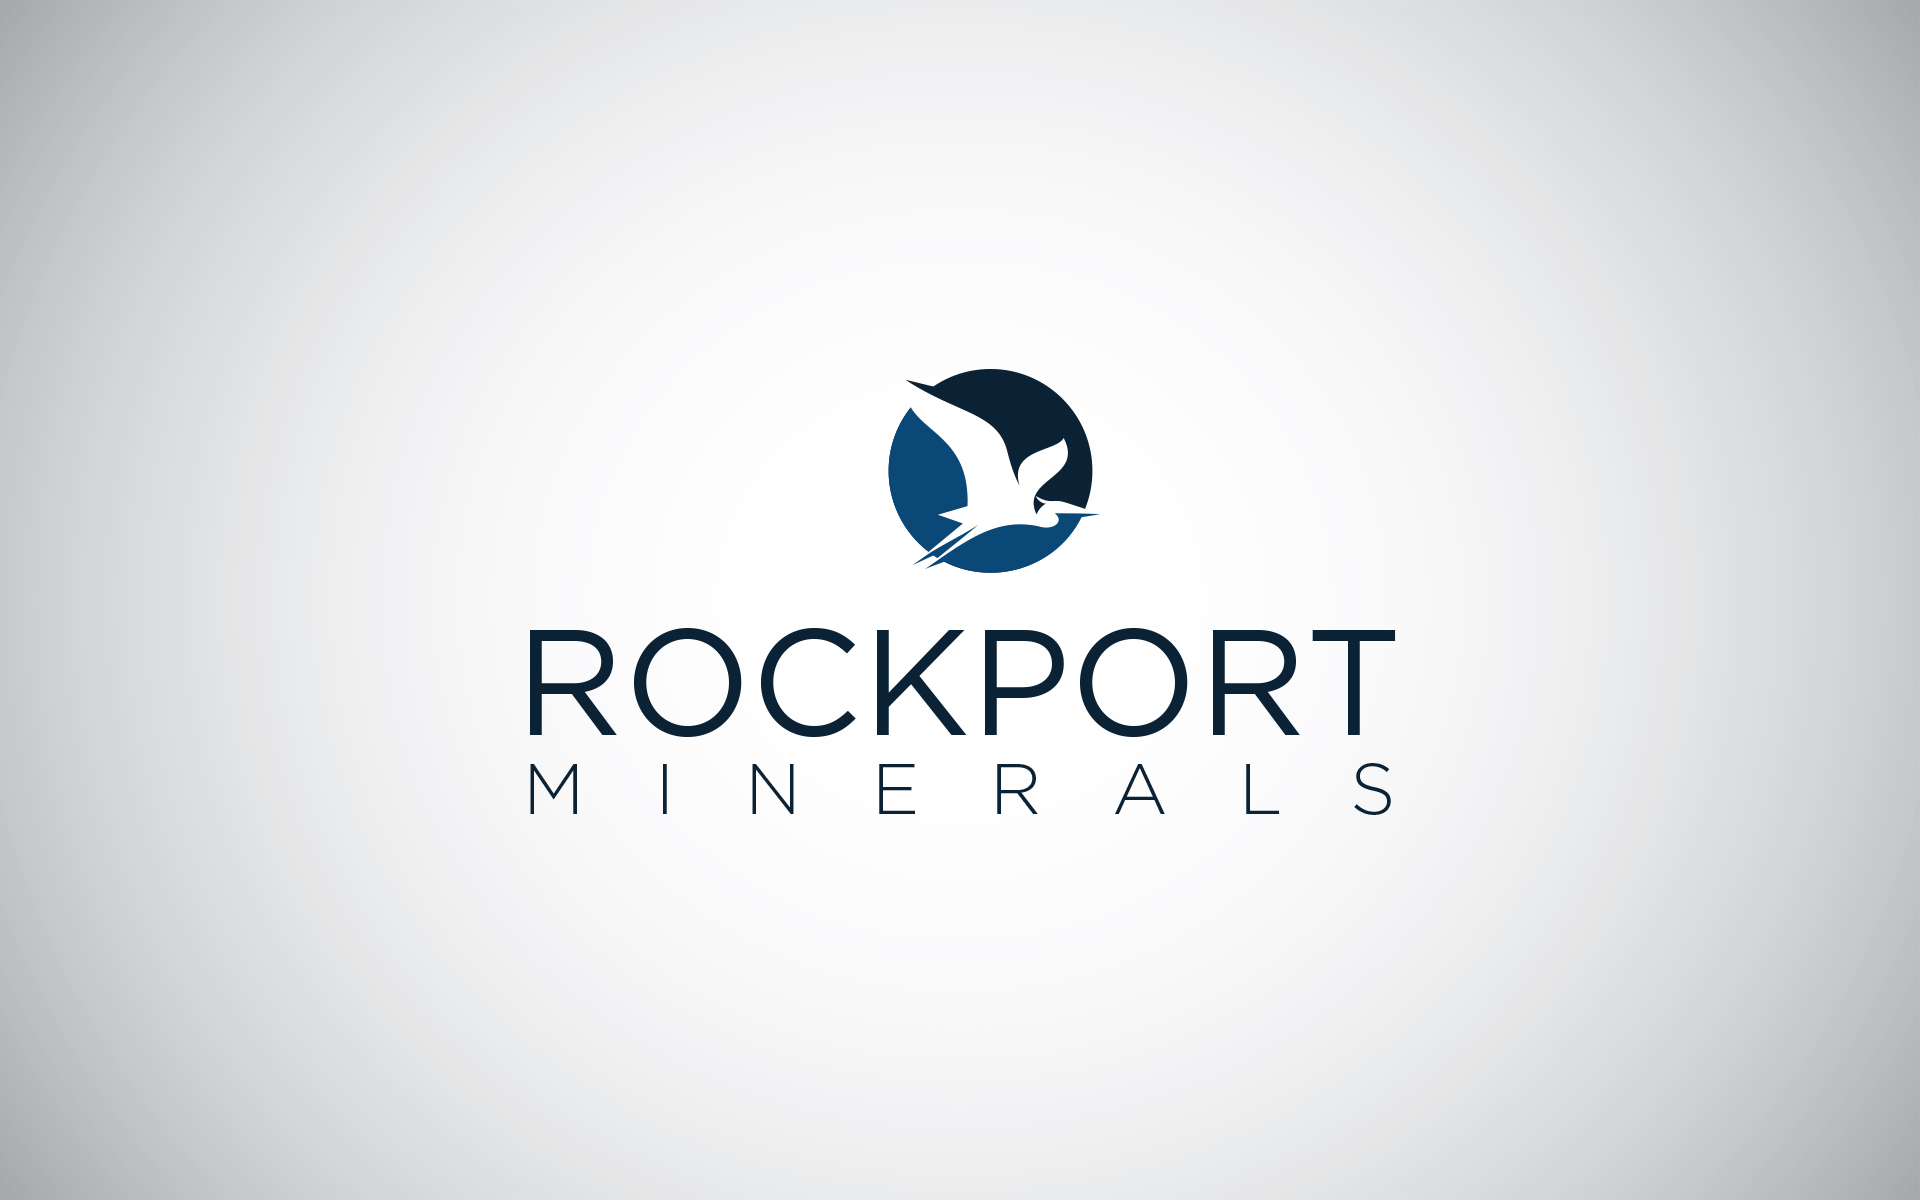 Rockport Minerals